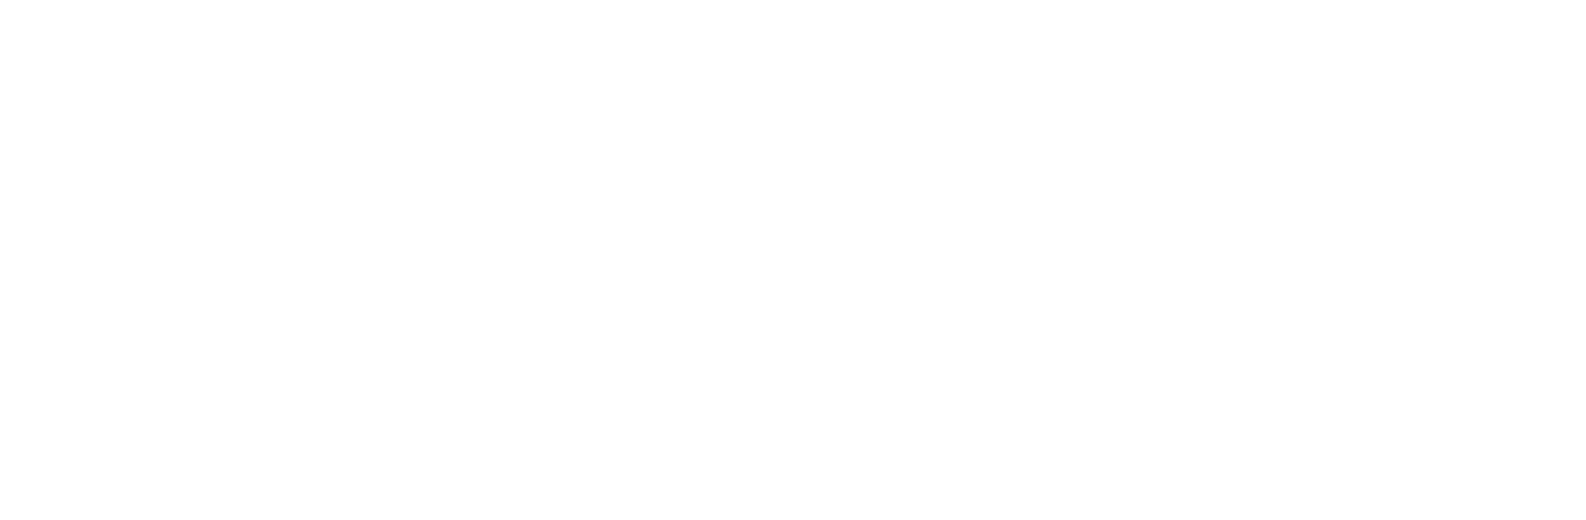 Revvity Logo groß für dunkle Hintergründe (transparentes PNG)